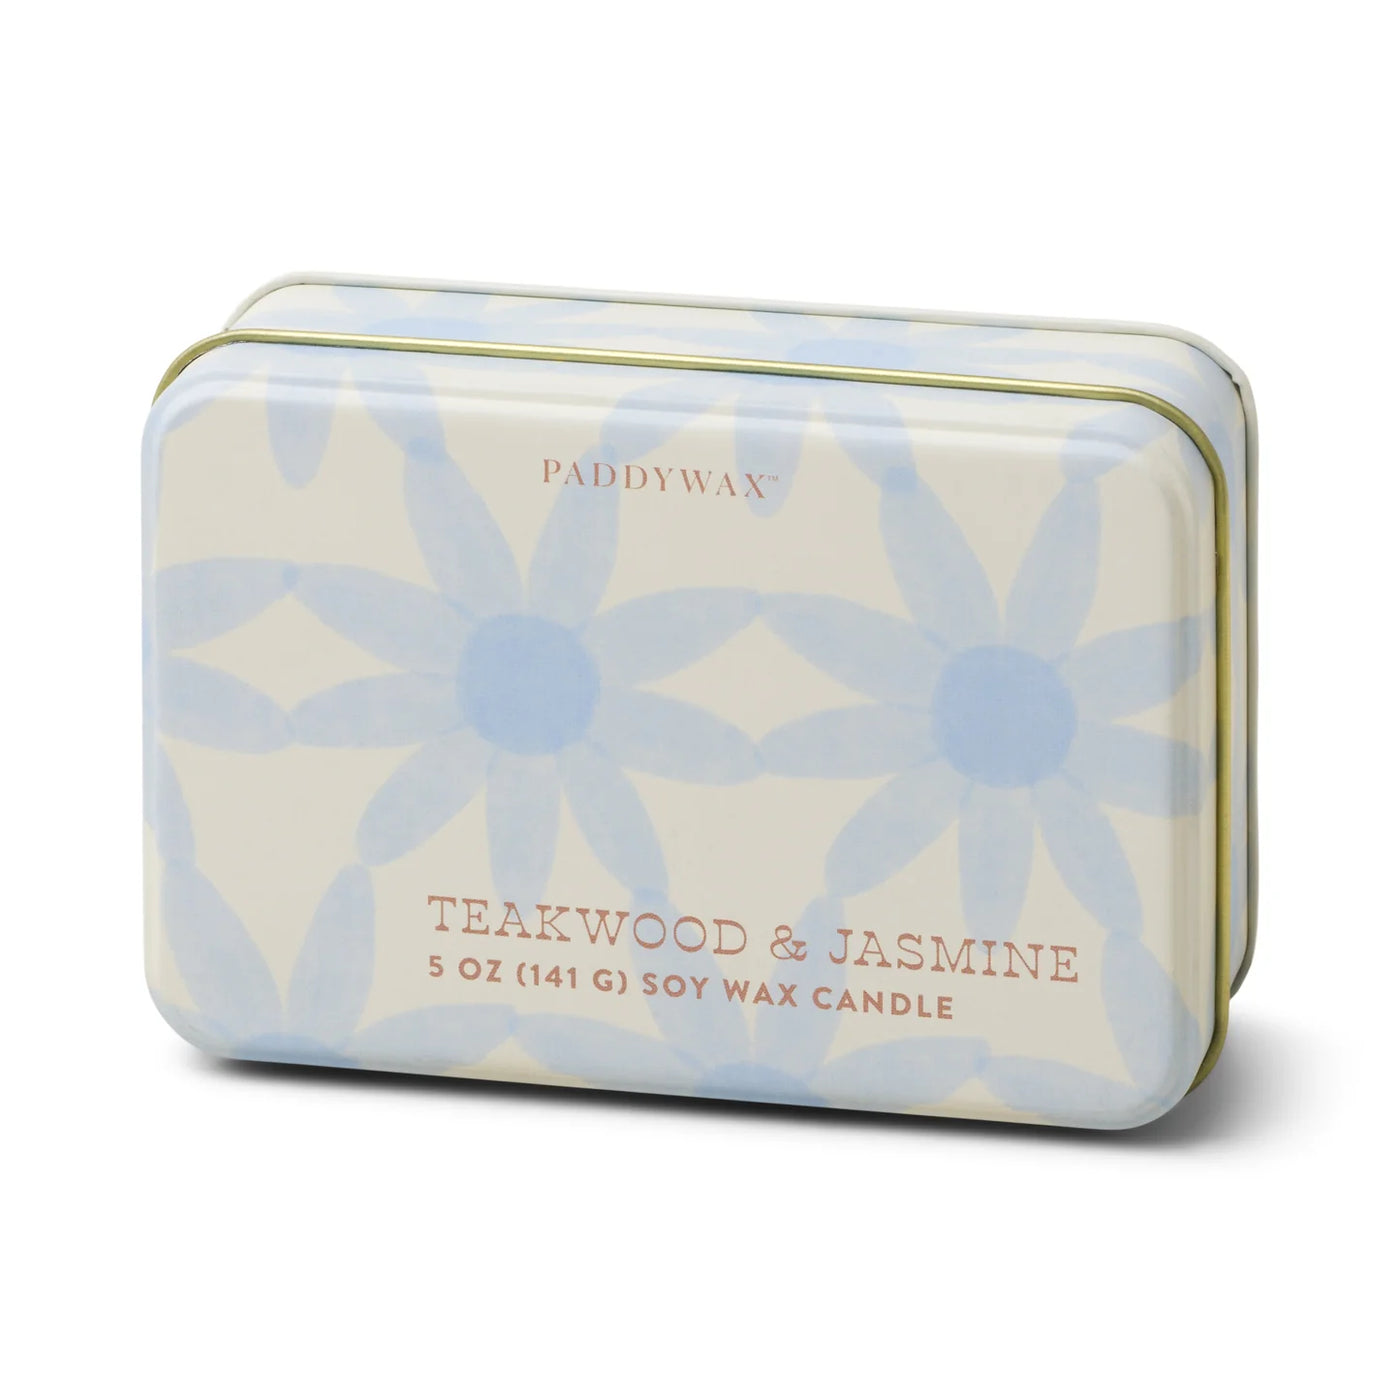 Paddywax Everyday Tin - Teakwood & Jasmine